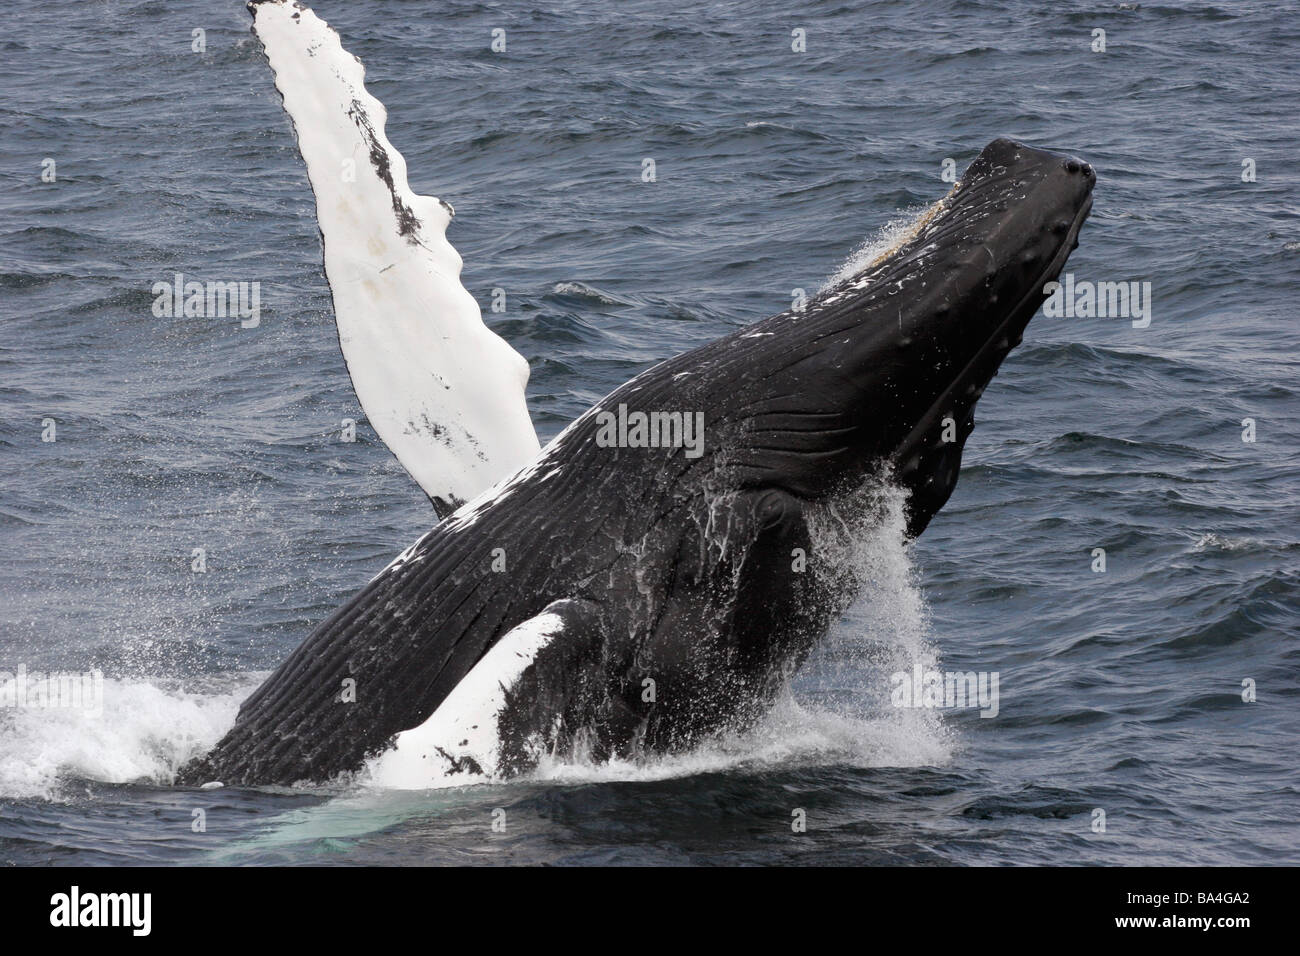 North Atlantic Humpback whale breach, breaching Stock Photo